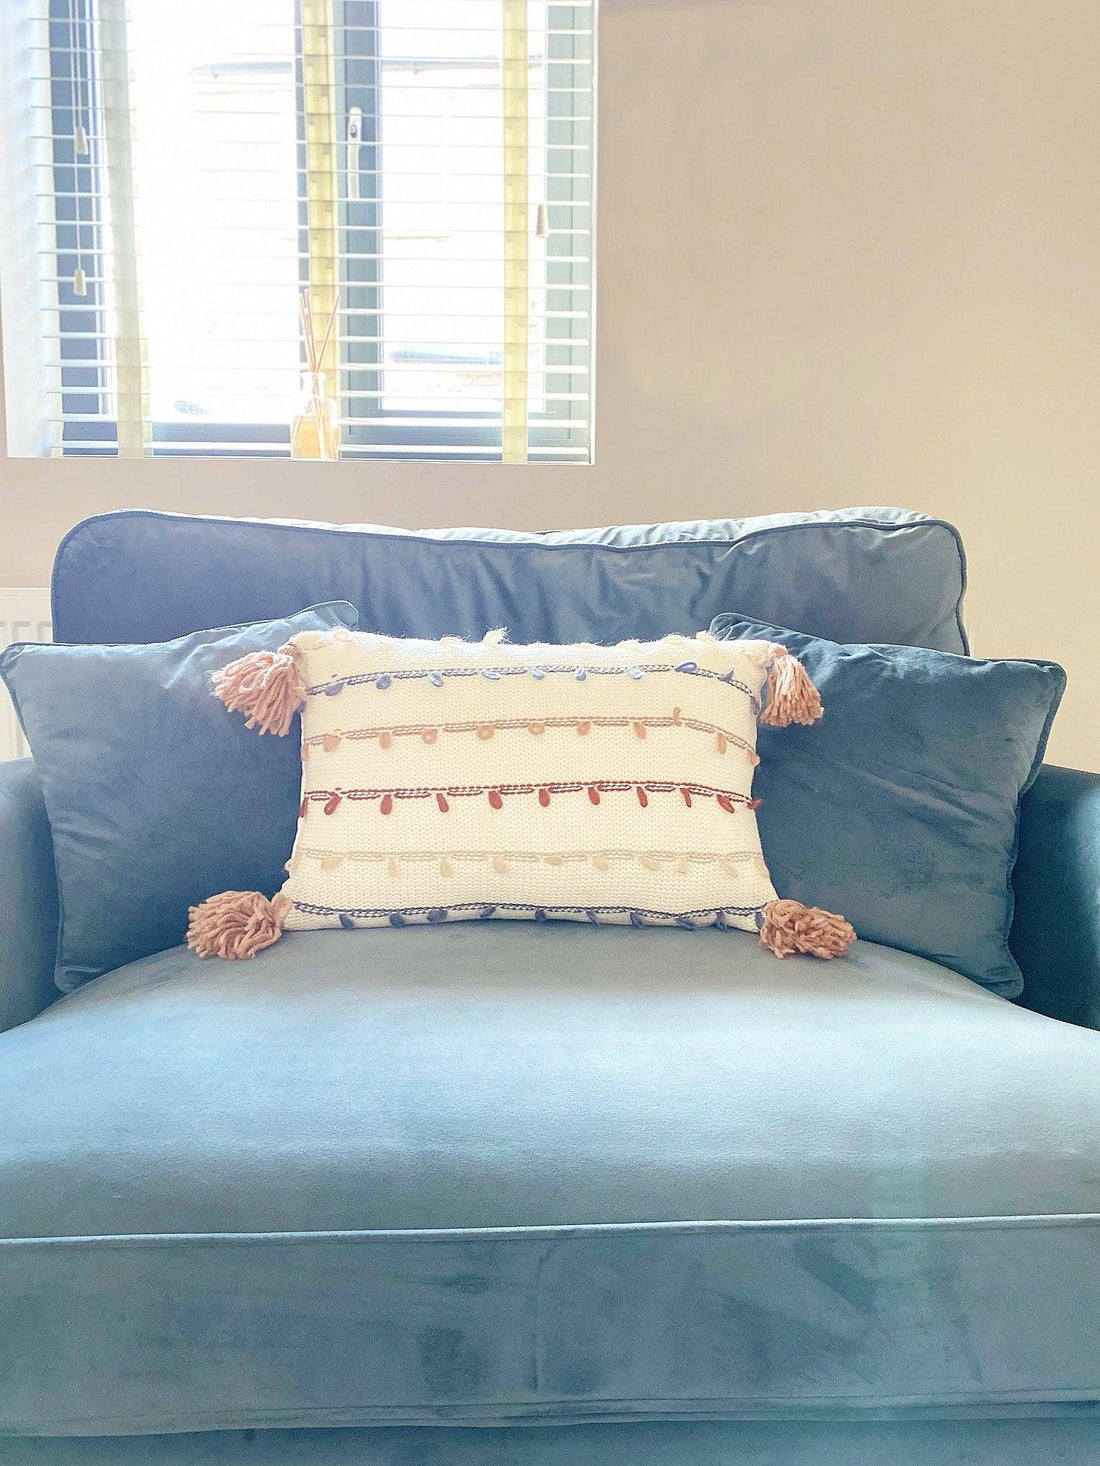 Striped Rectangle Cushion With Tassles - £21.99 - Throw Pillows 